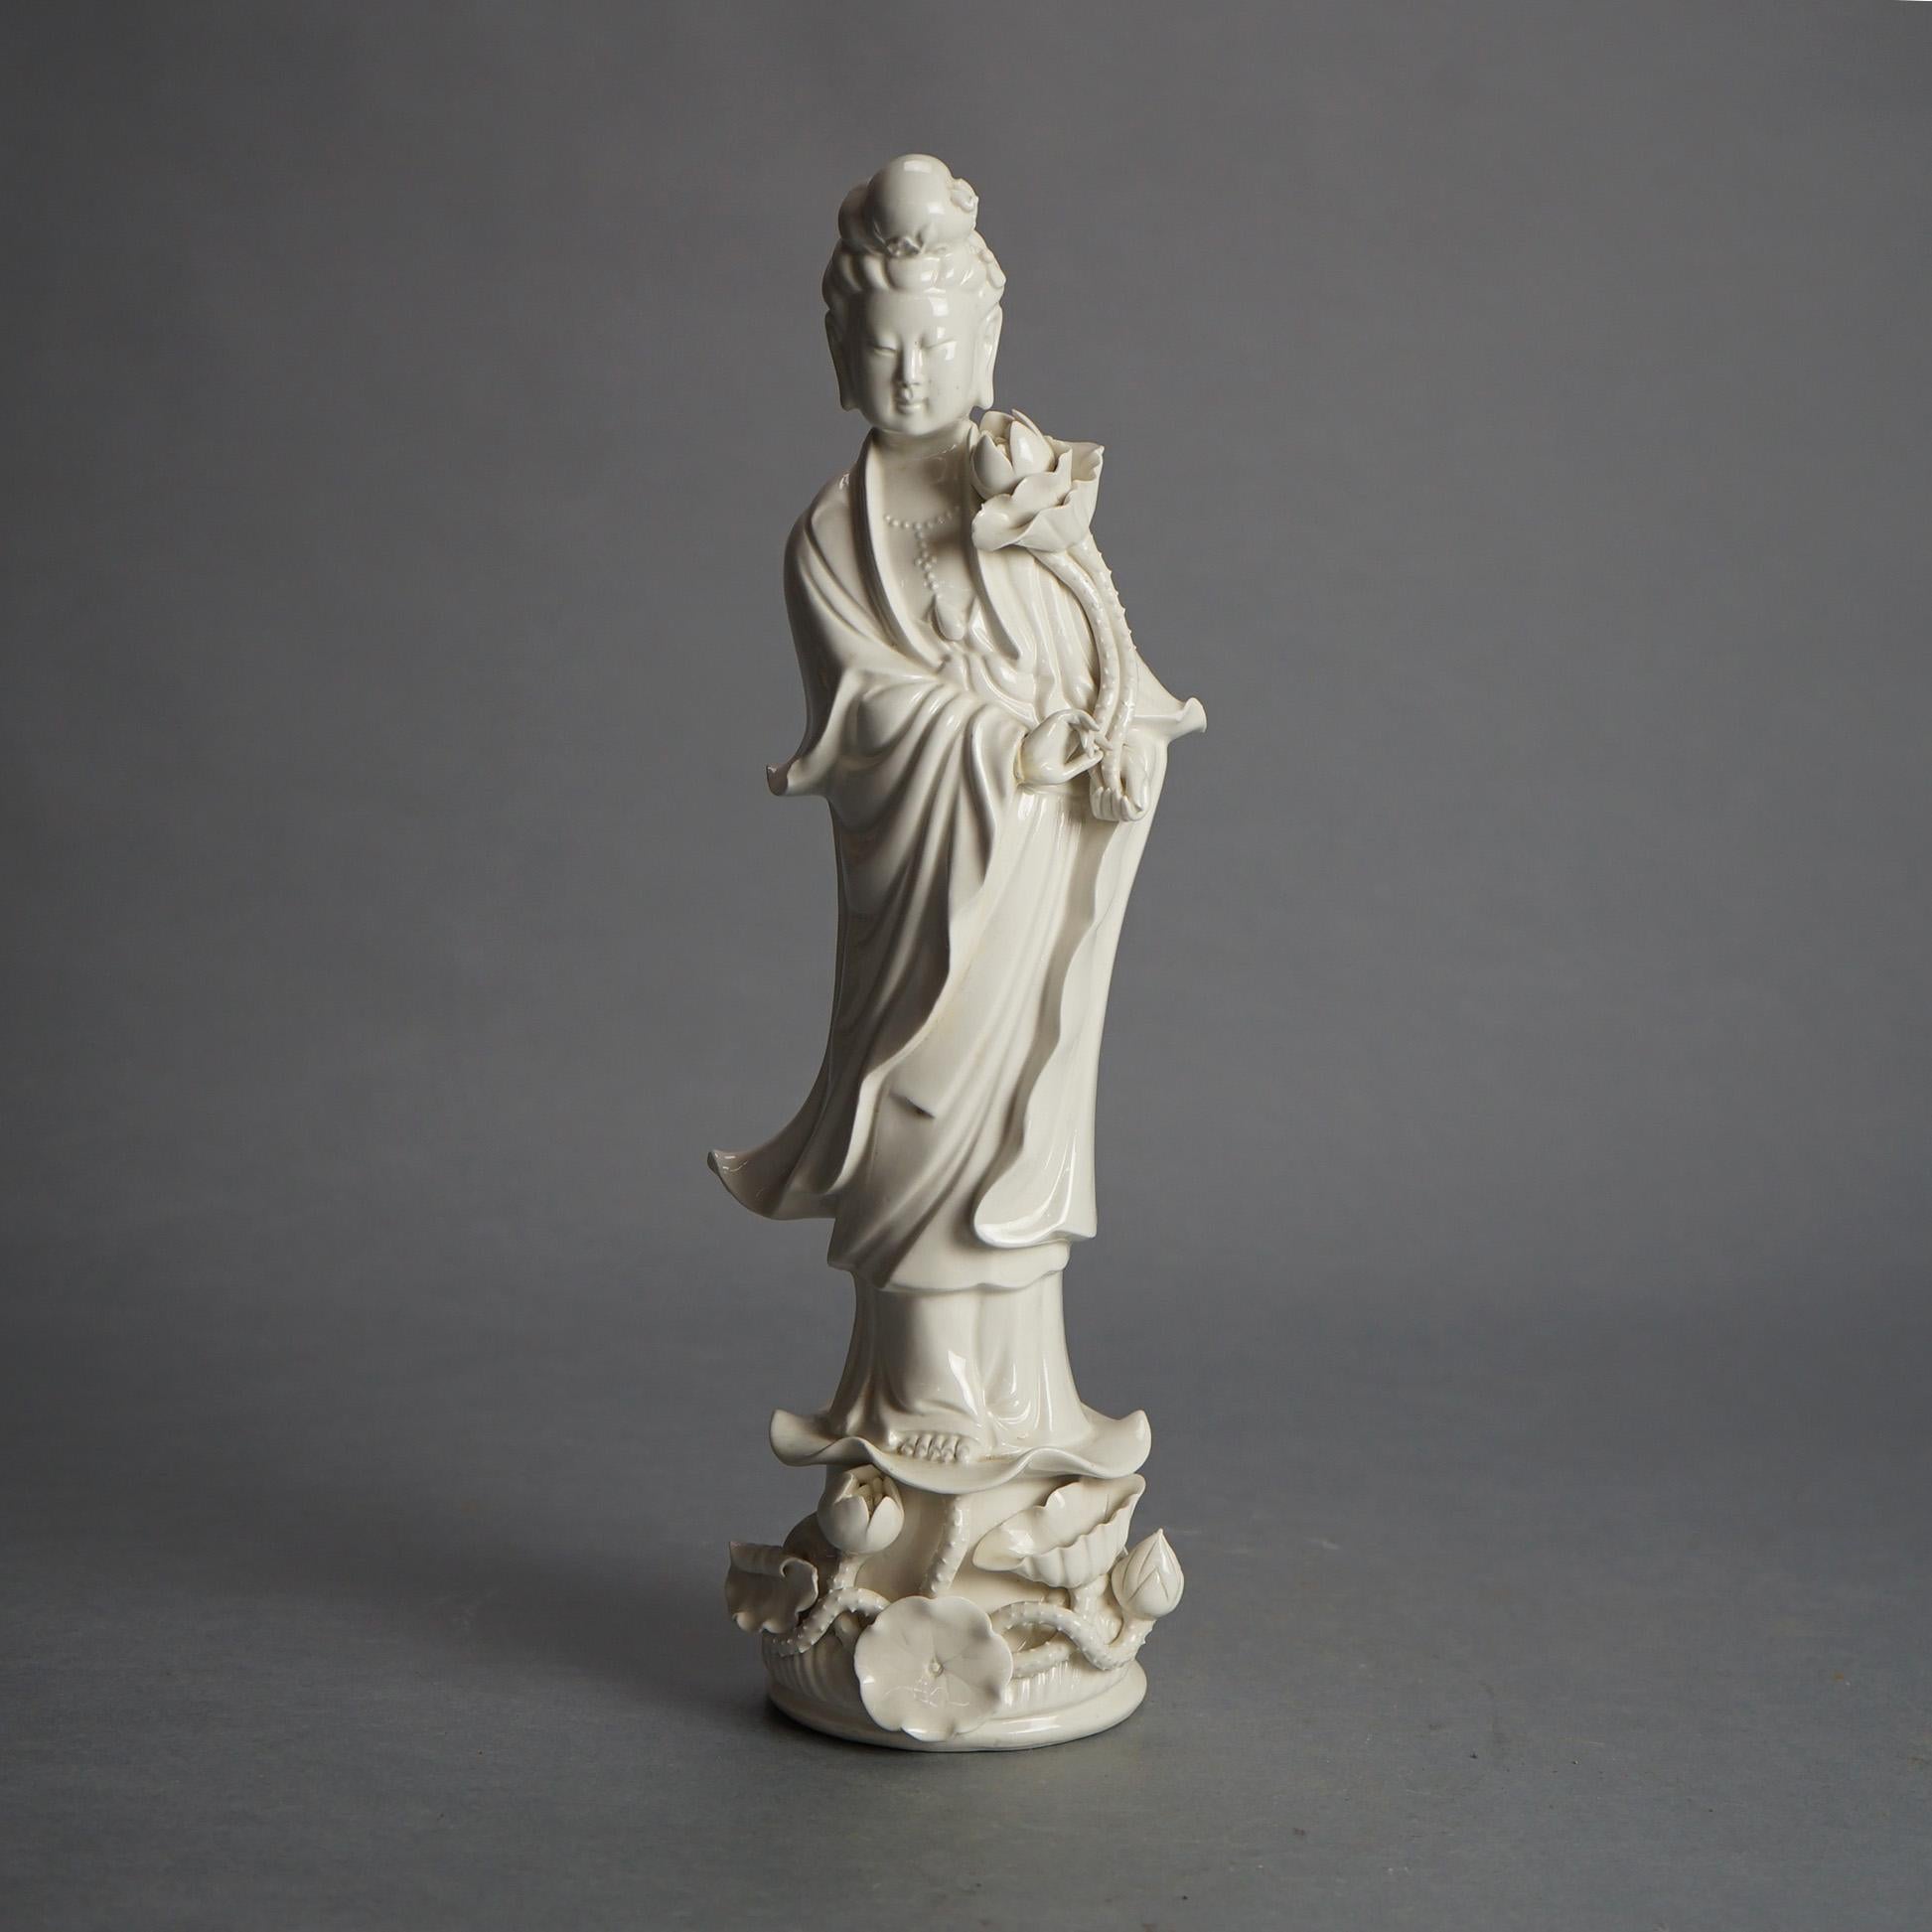 Antique Blanc De Chine Porcelain Shiva/Buddha Figure C1920

Measures - 14.5